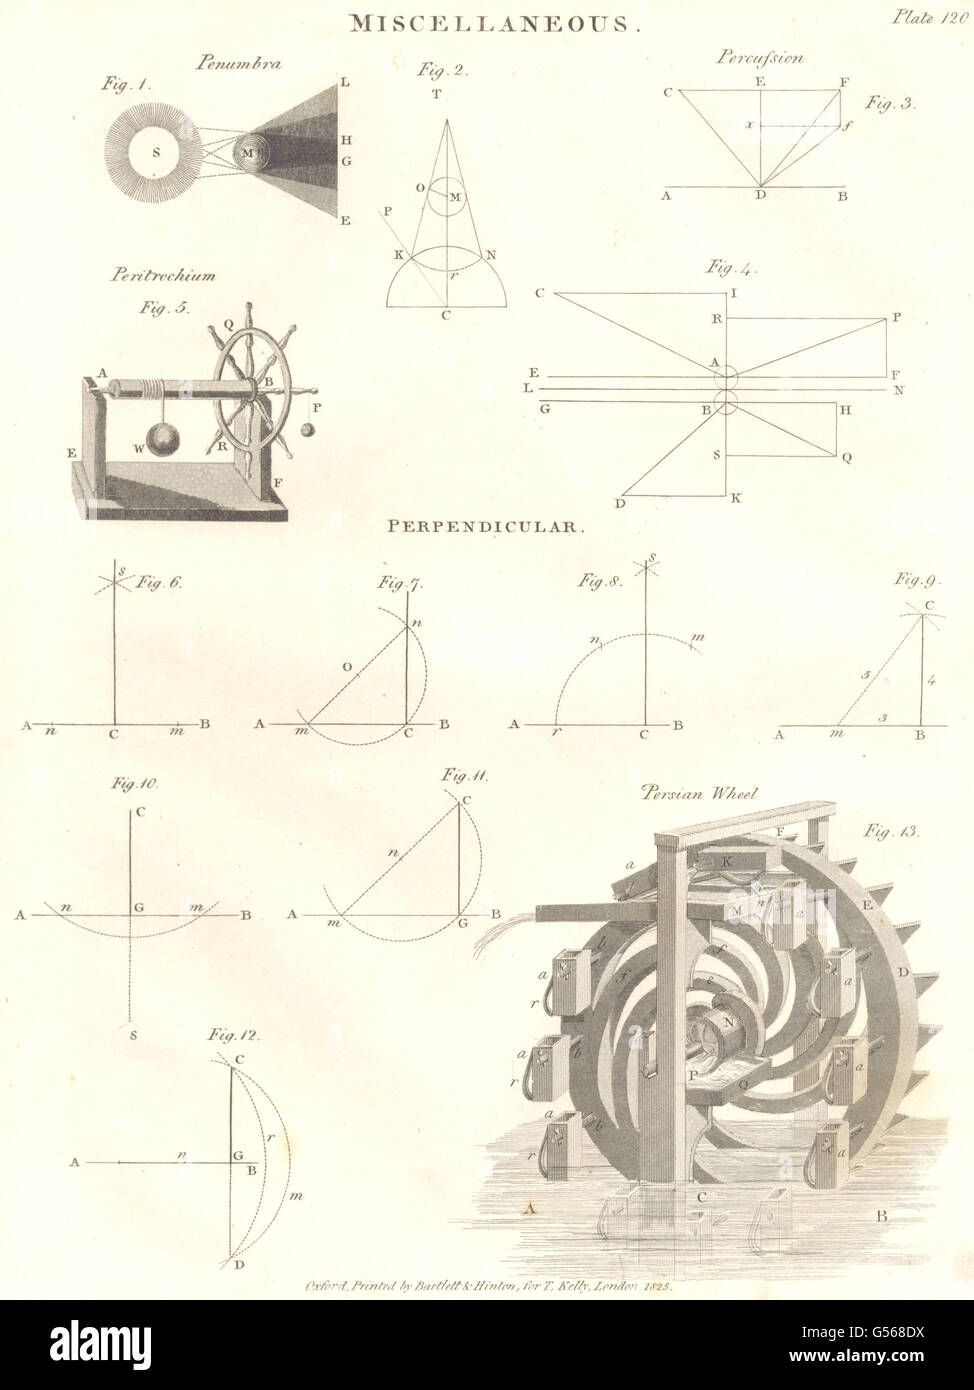 MATHS/SCIENCE: Perpendicular Penumbra Percussion Persian Wheel Peritrochium 1830 Stock Photo